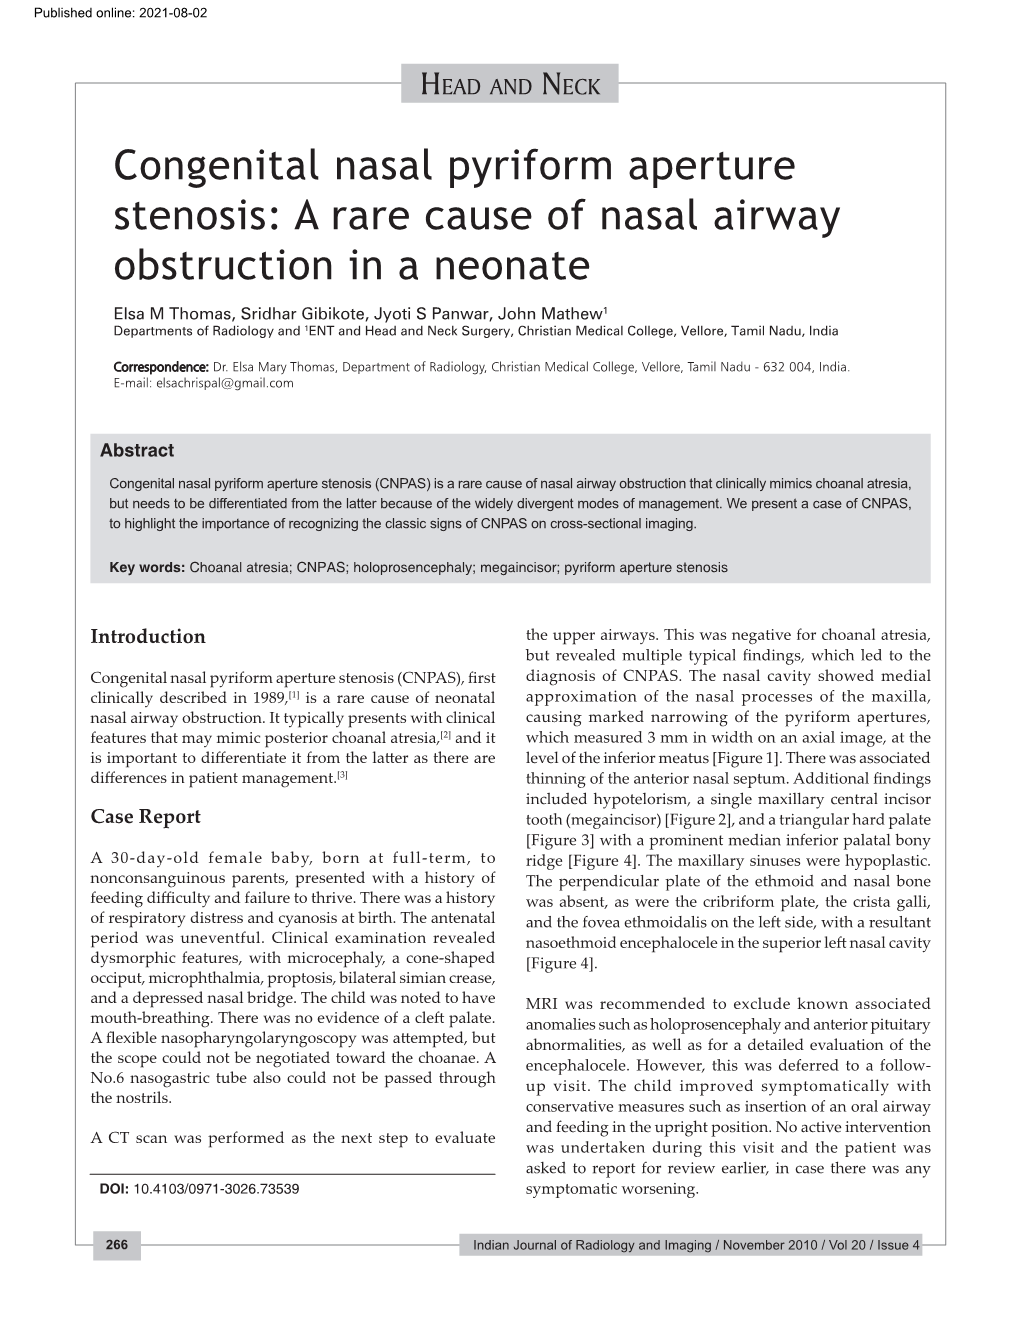 Congenital Nasal Pyriform Aperture Stenosis